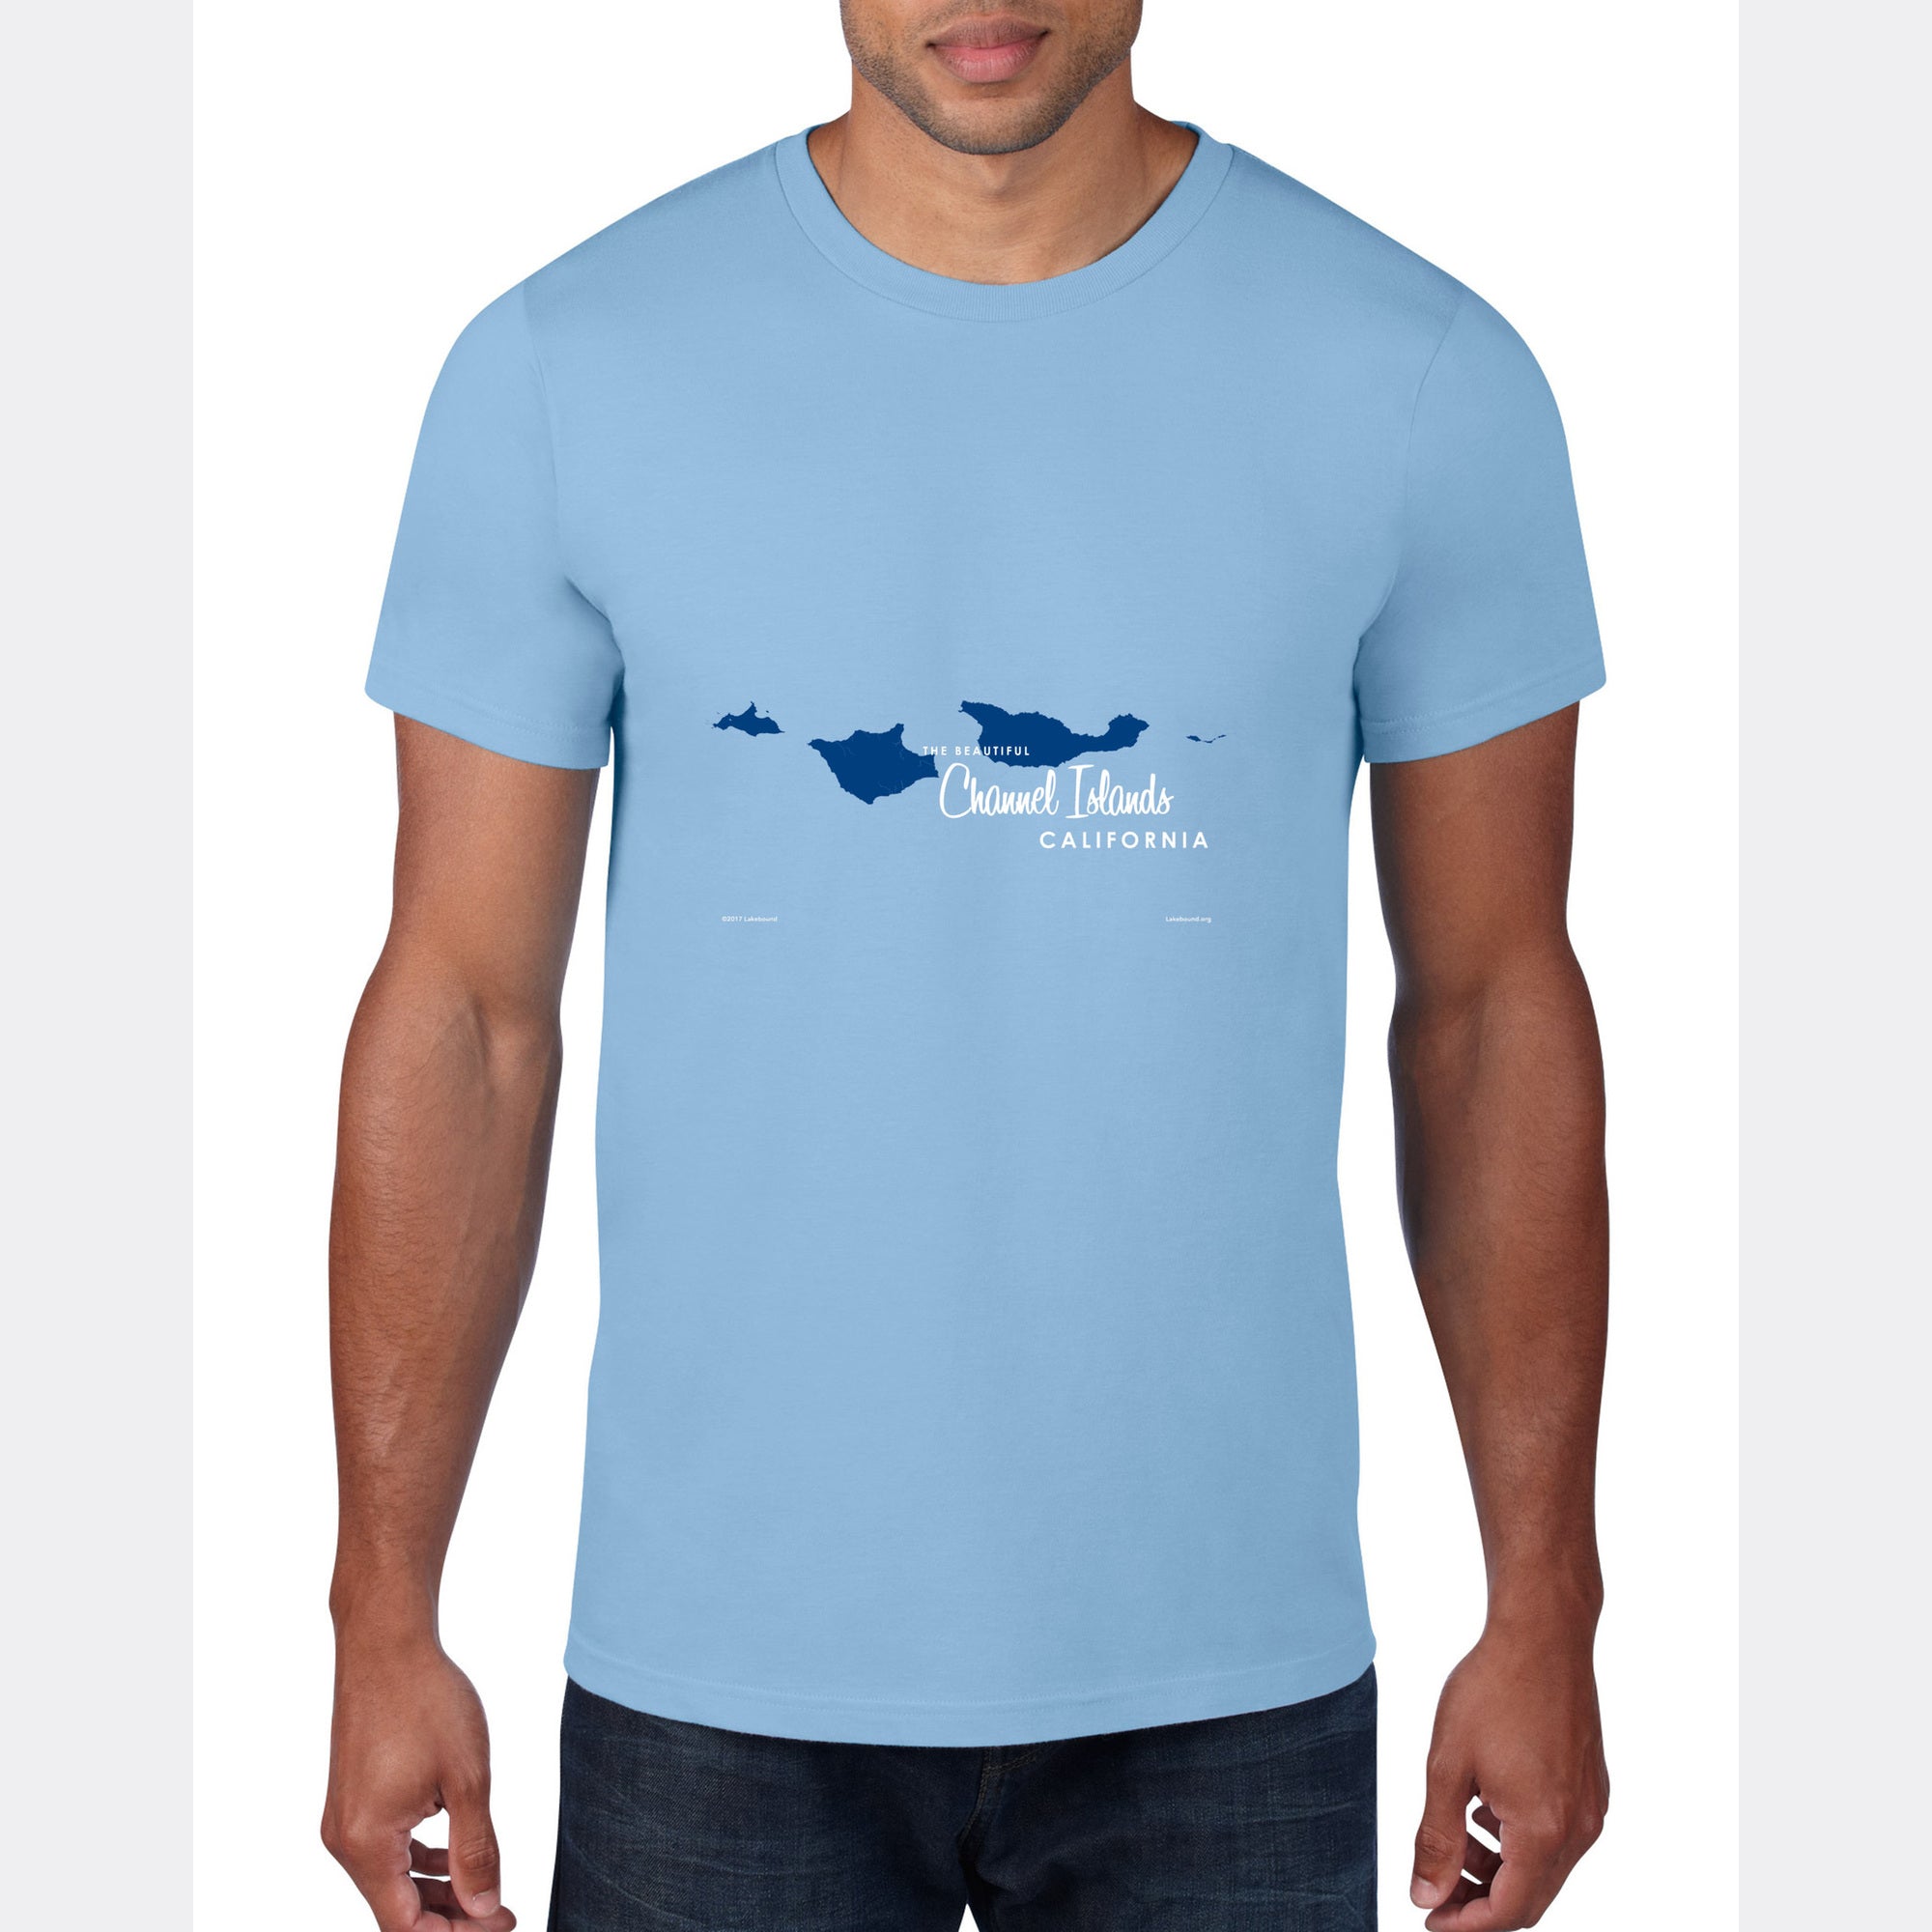 Channel Islands California, T-Shirt